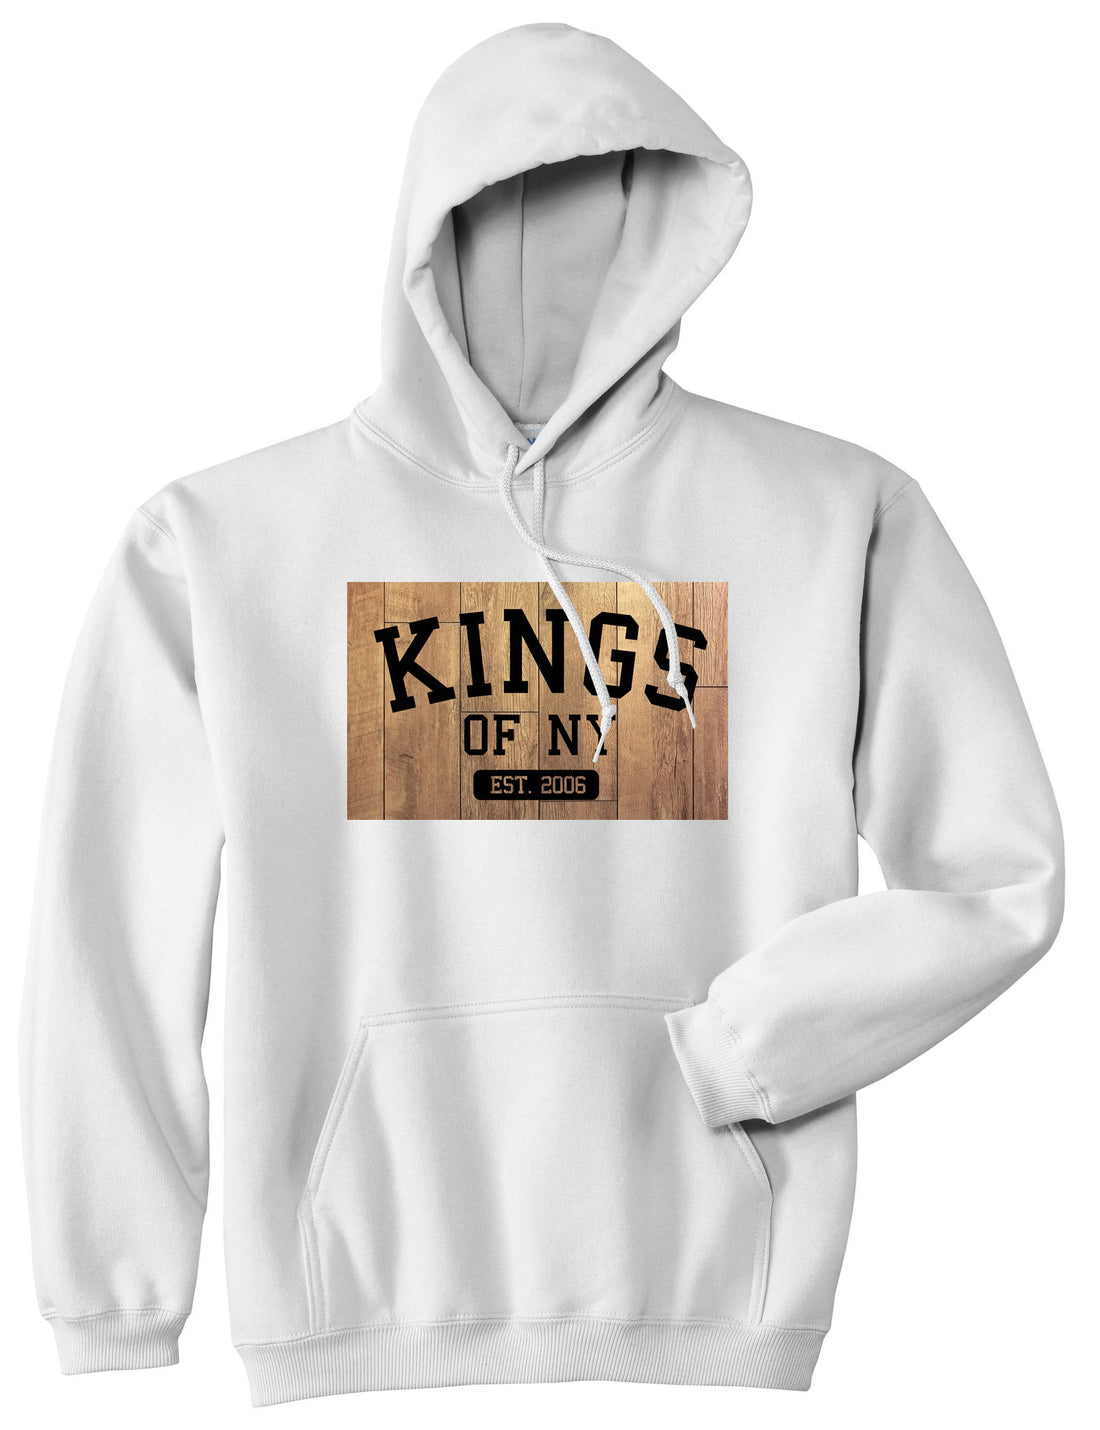 Hardwood Basketball Logo Pullover Hoodie Hoody in White by Kings Of NY